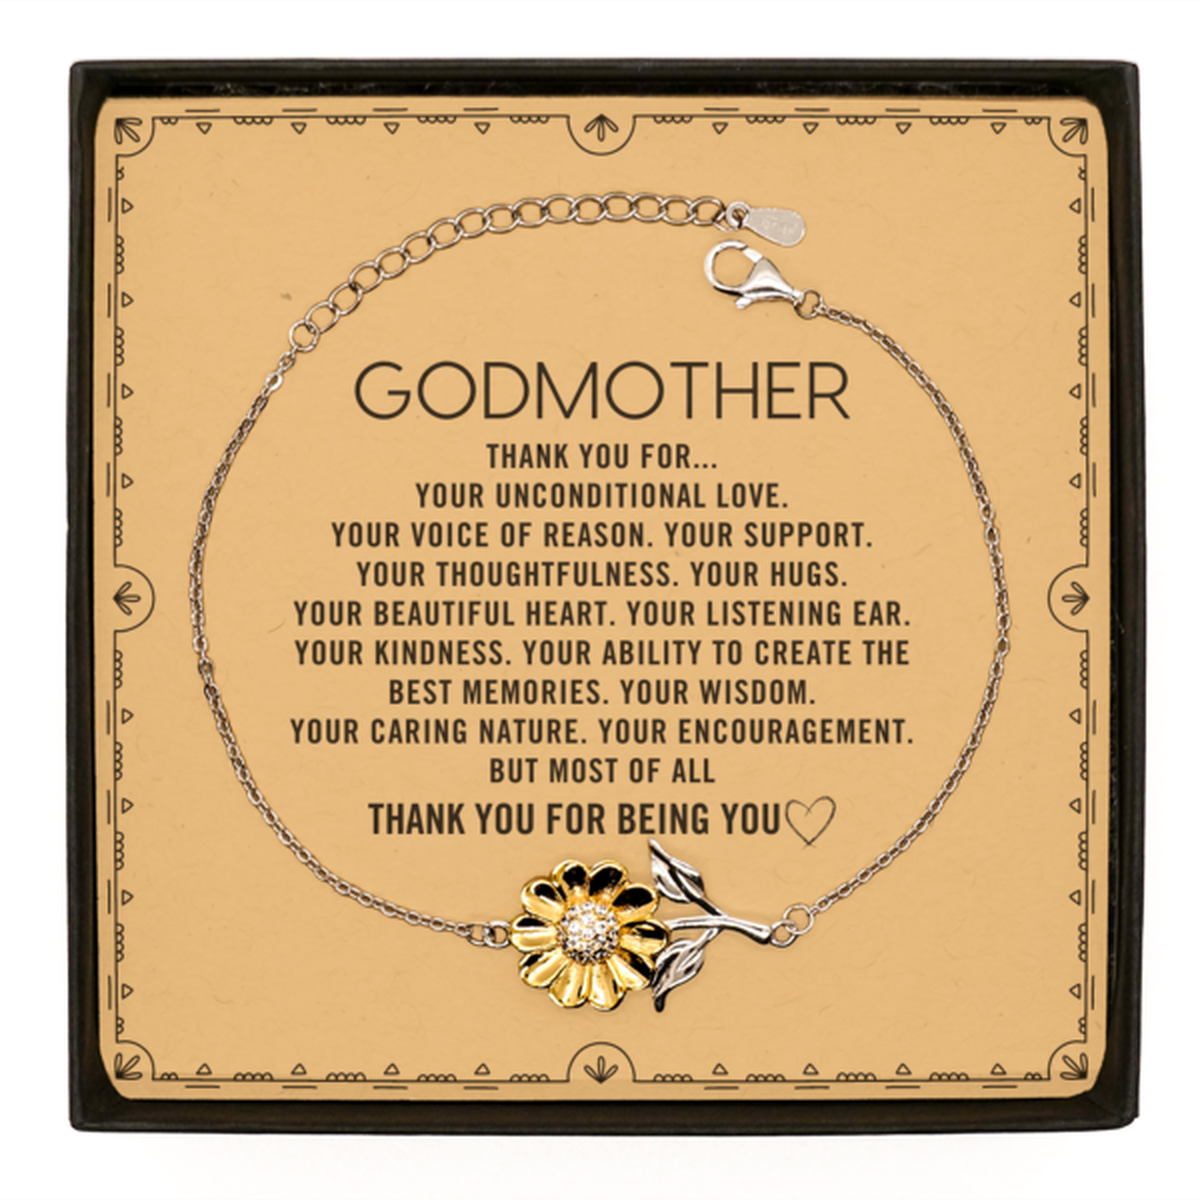 Godmother Sunflower Bracelet Custom, Message Card Gifts For Godmother Christmas Graduation Birthday Gifts for Men Women Godmother Thank you for Your unconditional love